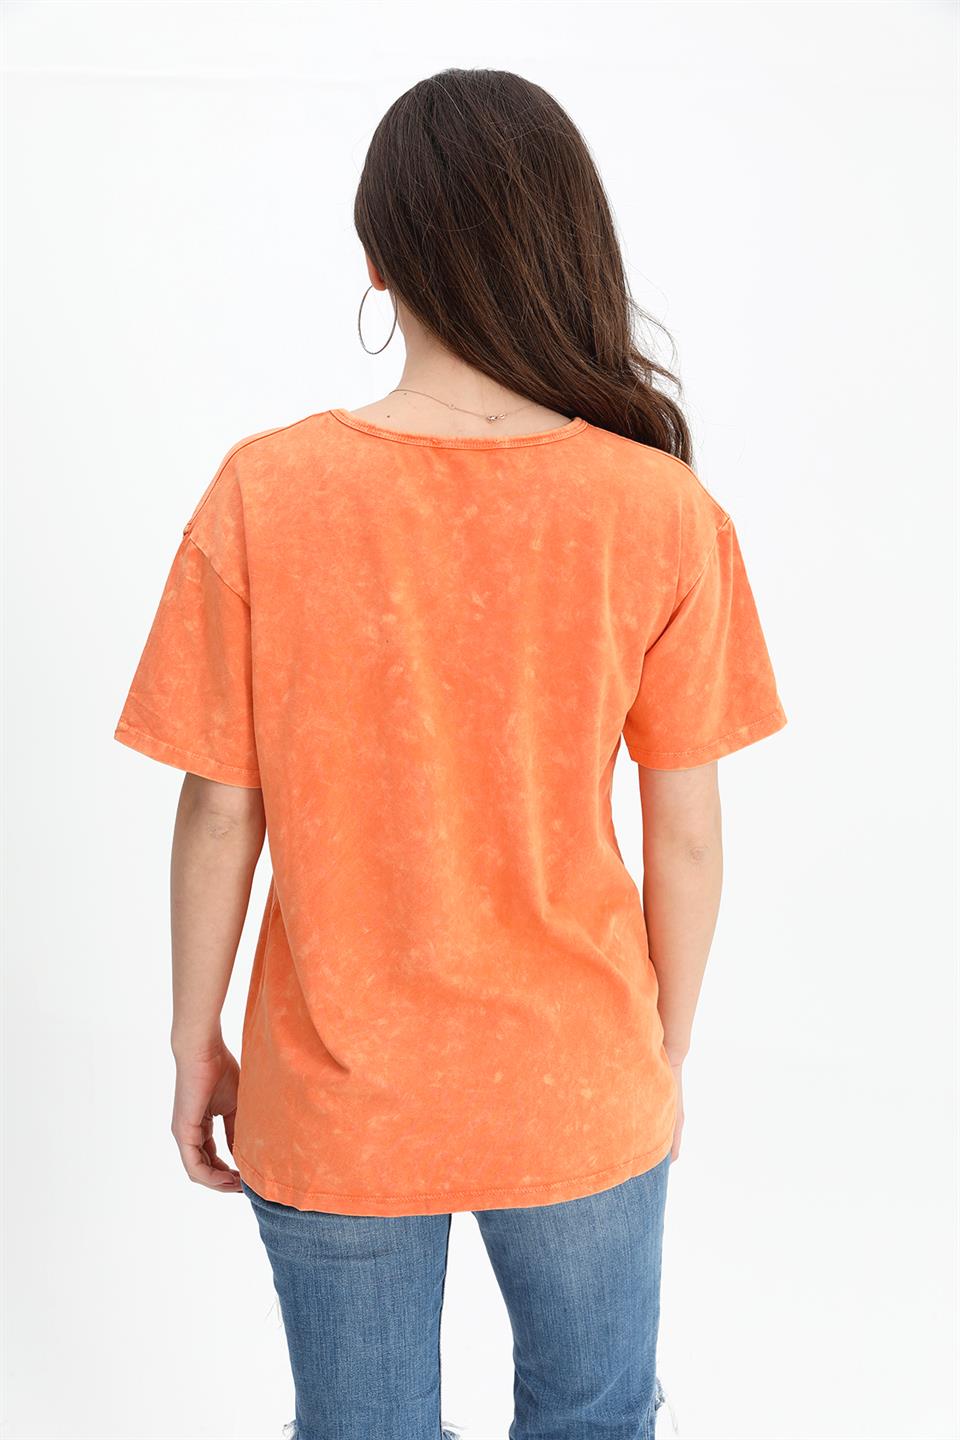 Women's T-shirt Washed Fabric Crew Neck - Orange - STREETMODE™